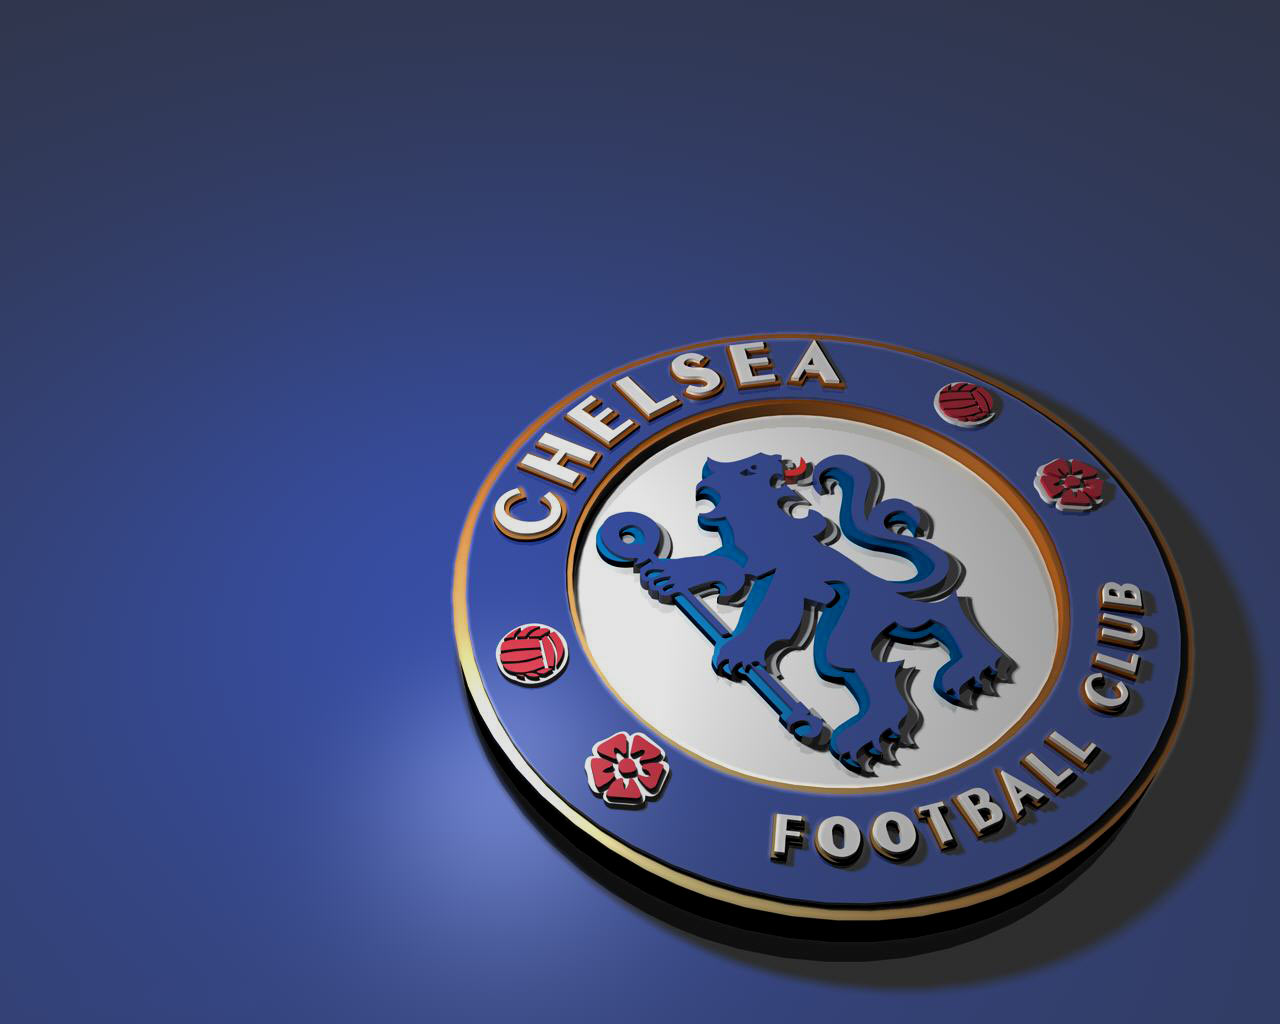 Chelsea FC Wallpaper 2 1280x1024